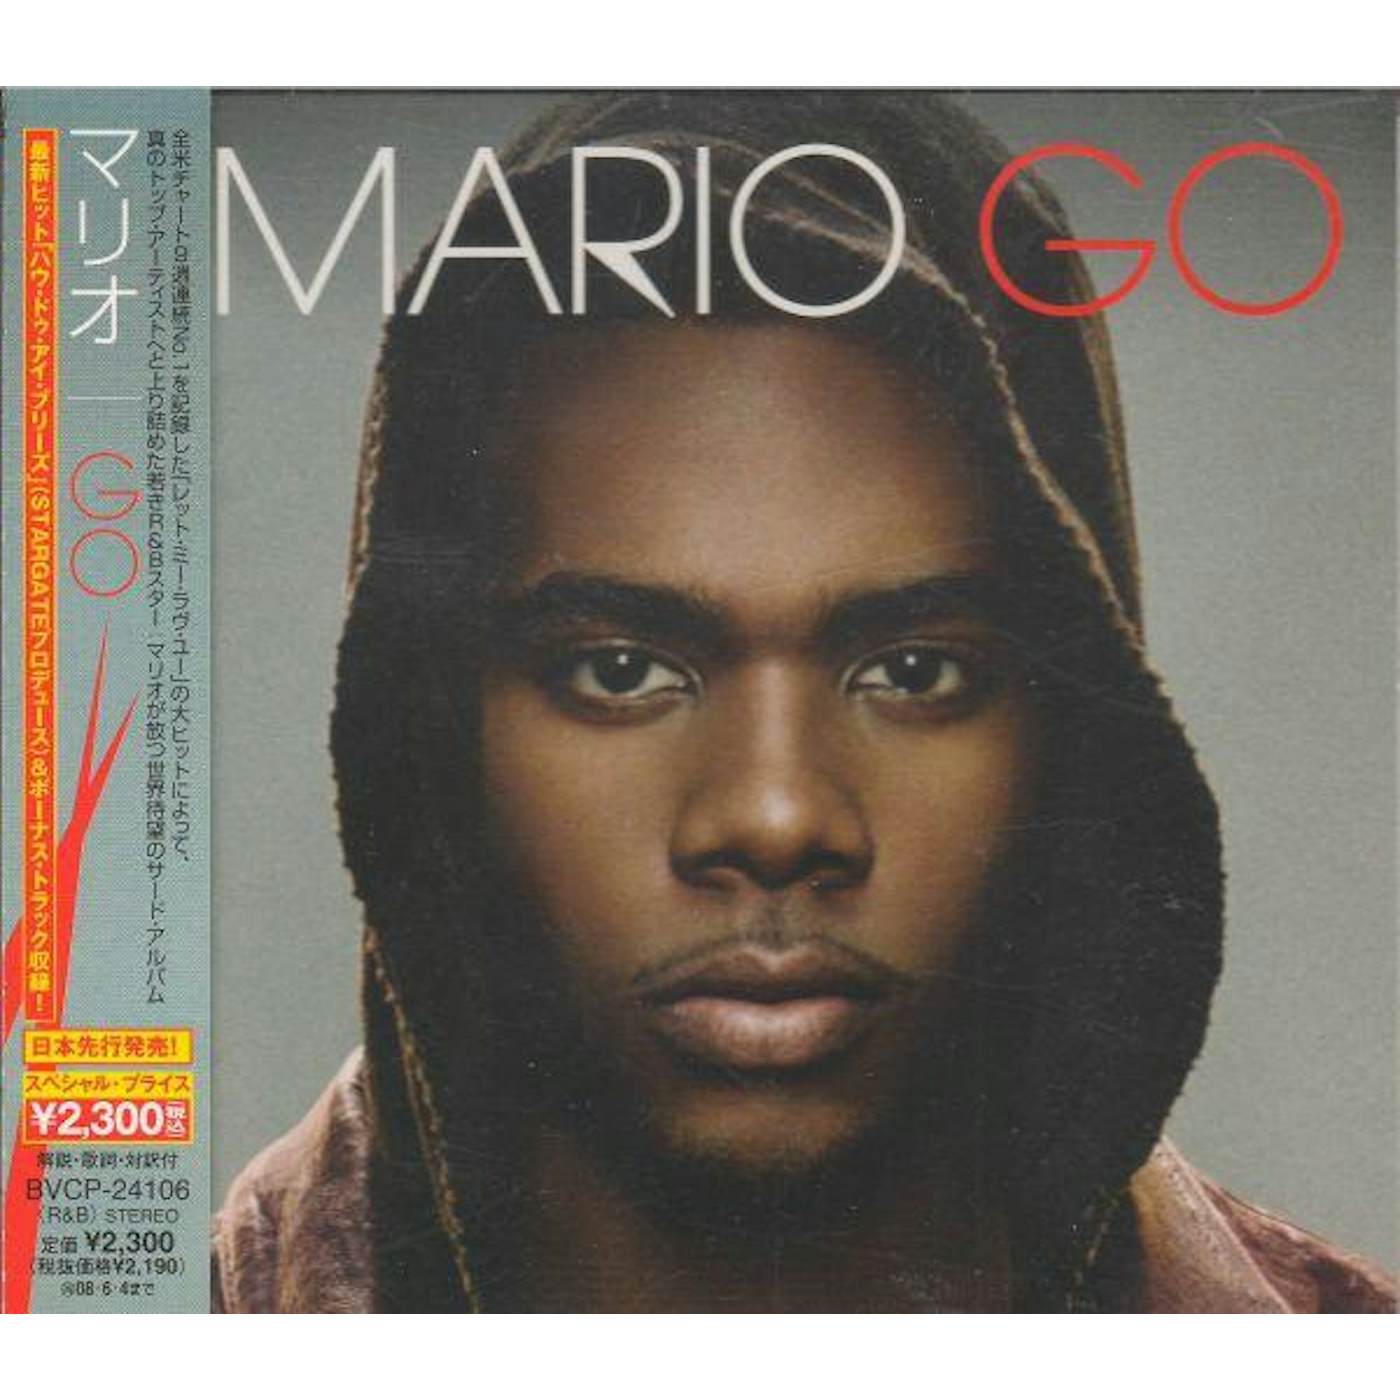 Mario GO (LIMITED) CD